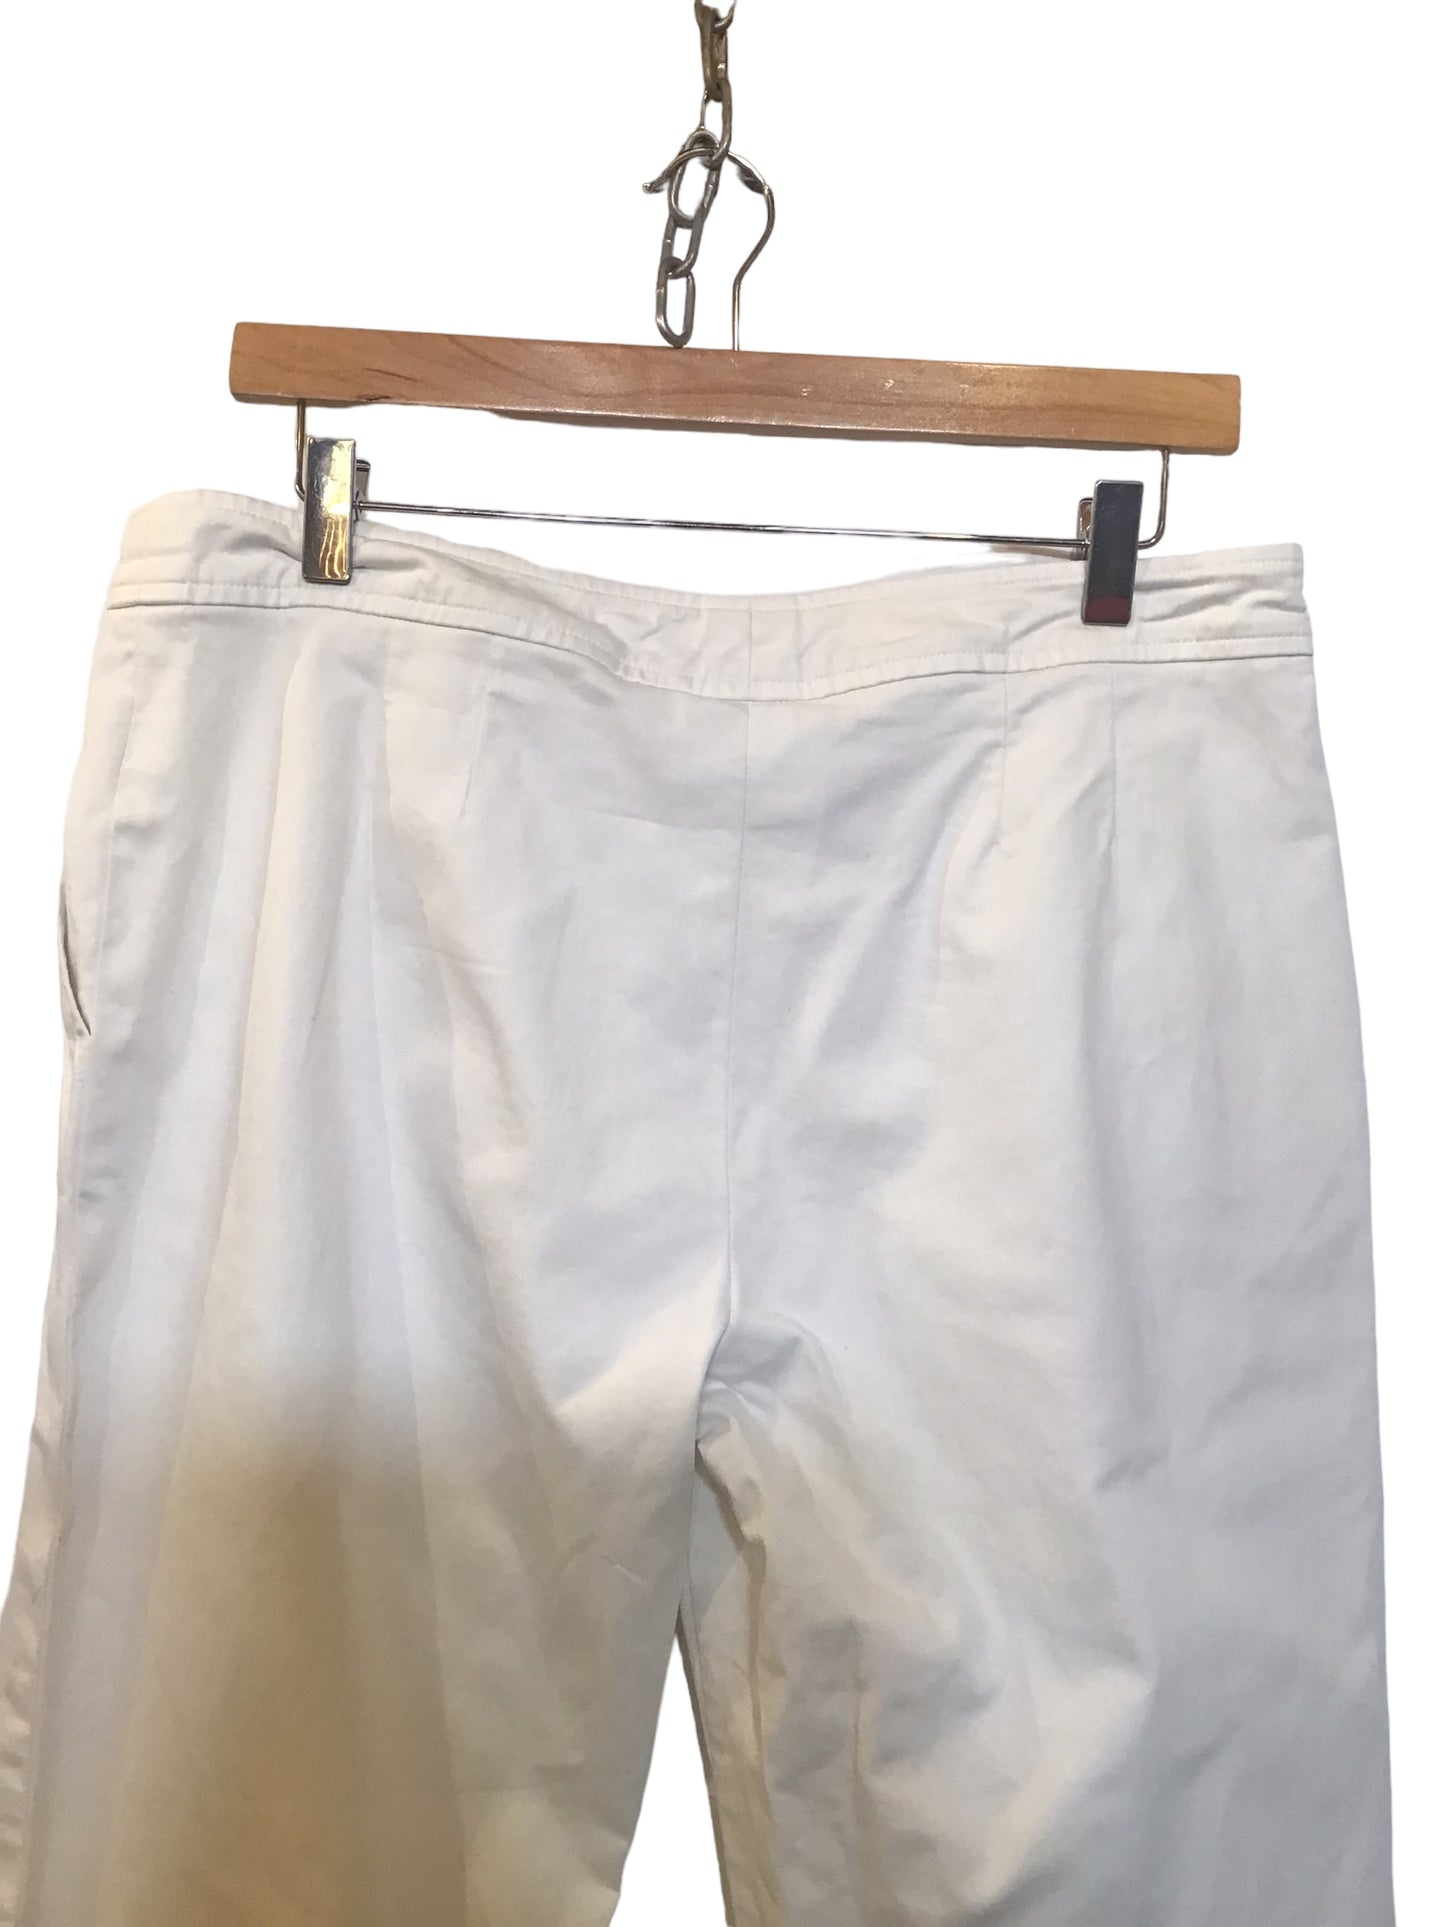 Max Mara Cropped White Trousers (Size L)